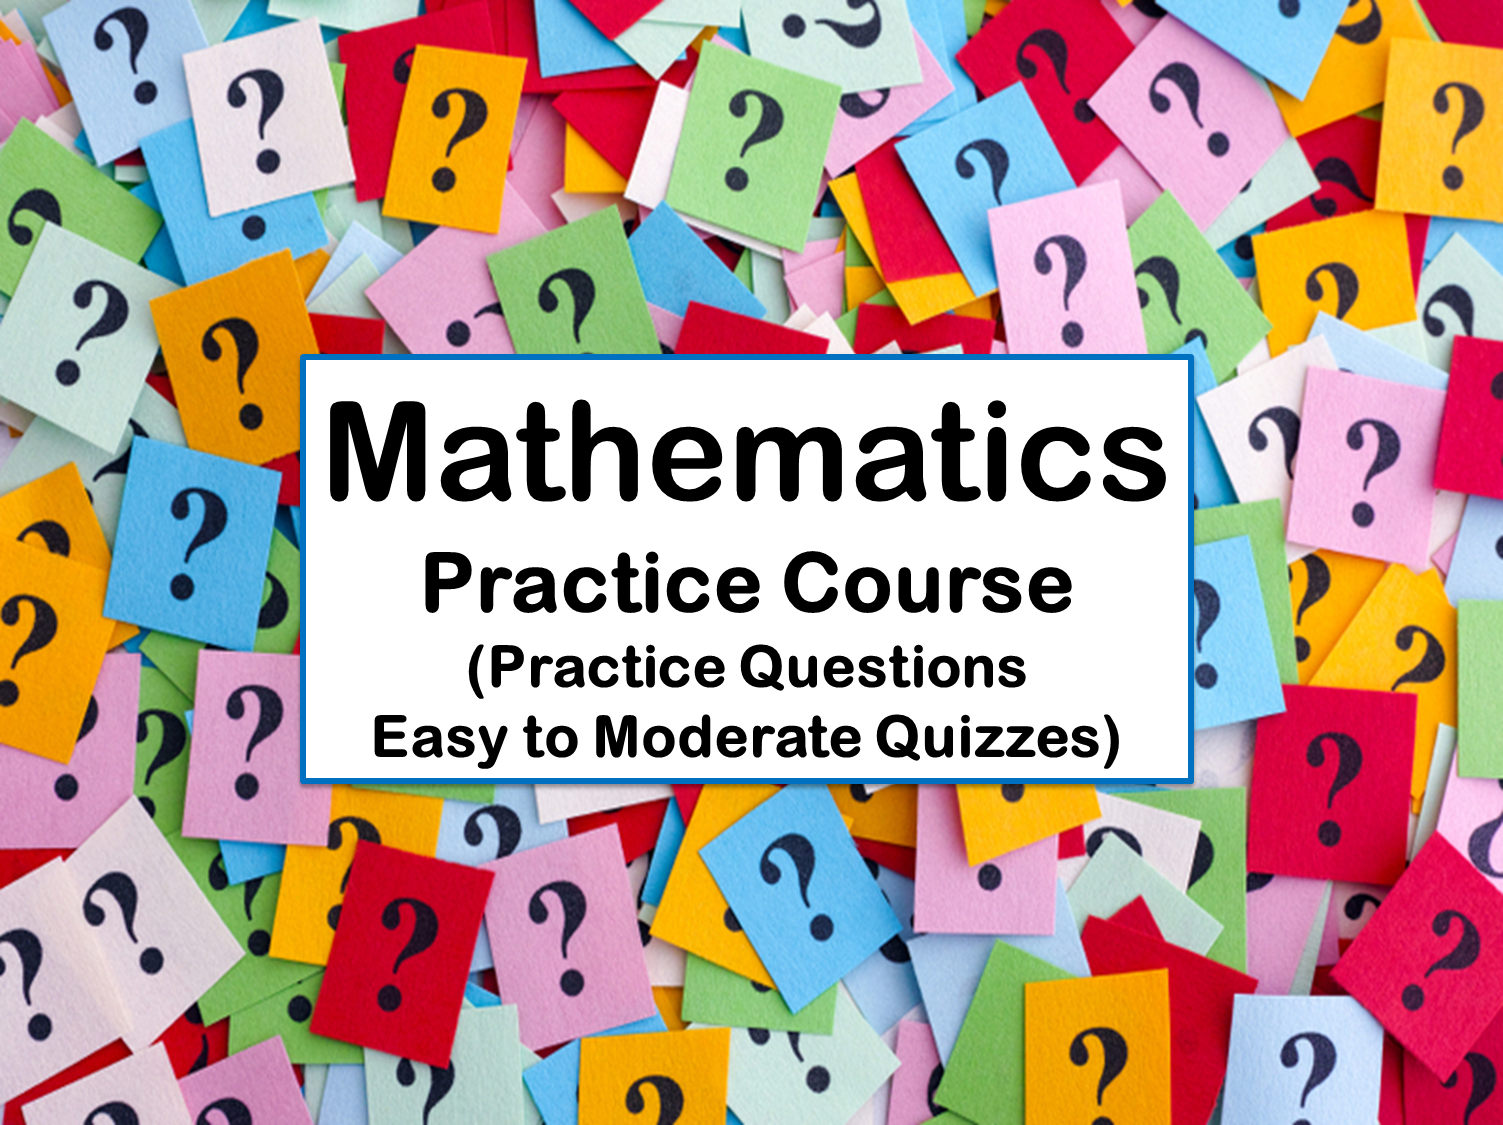 Mathematics - Practice Course